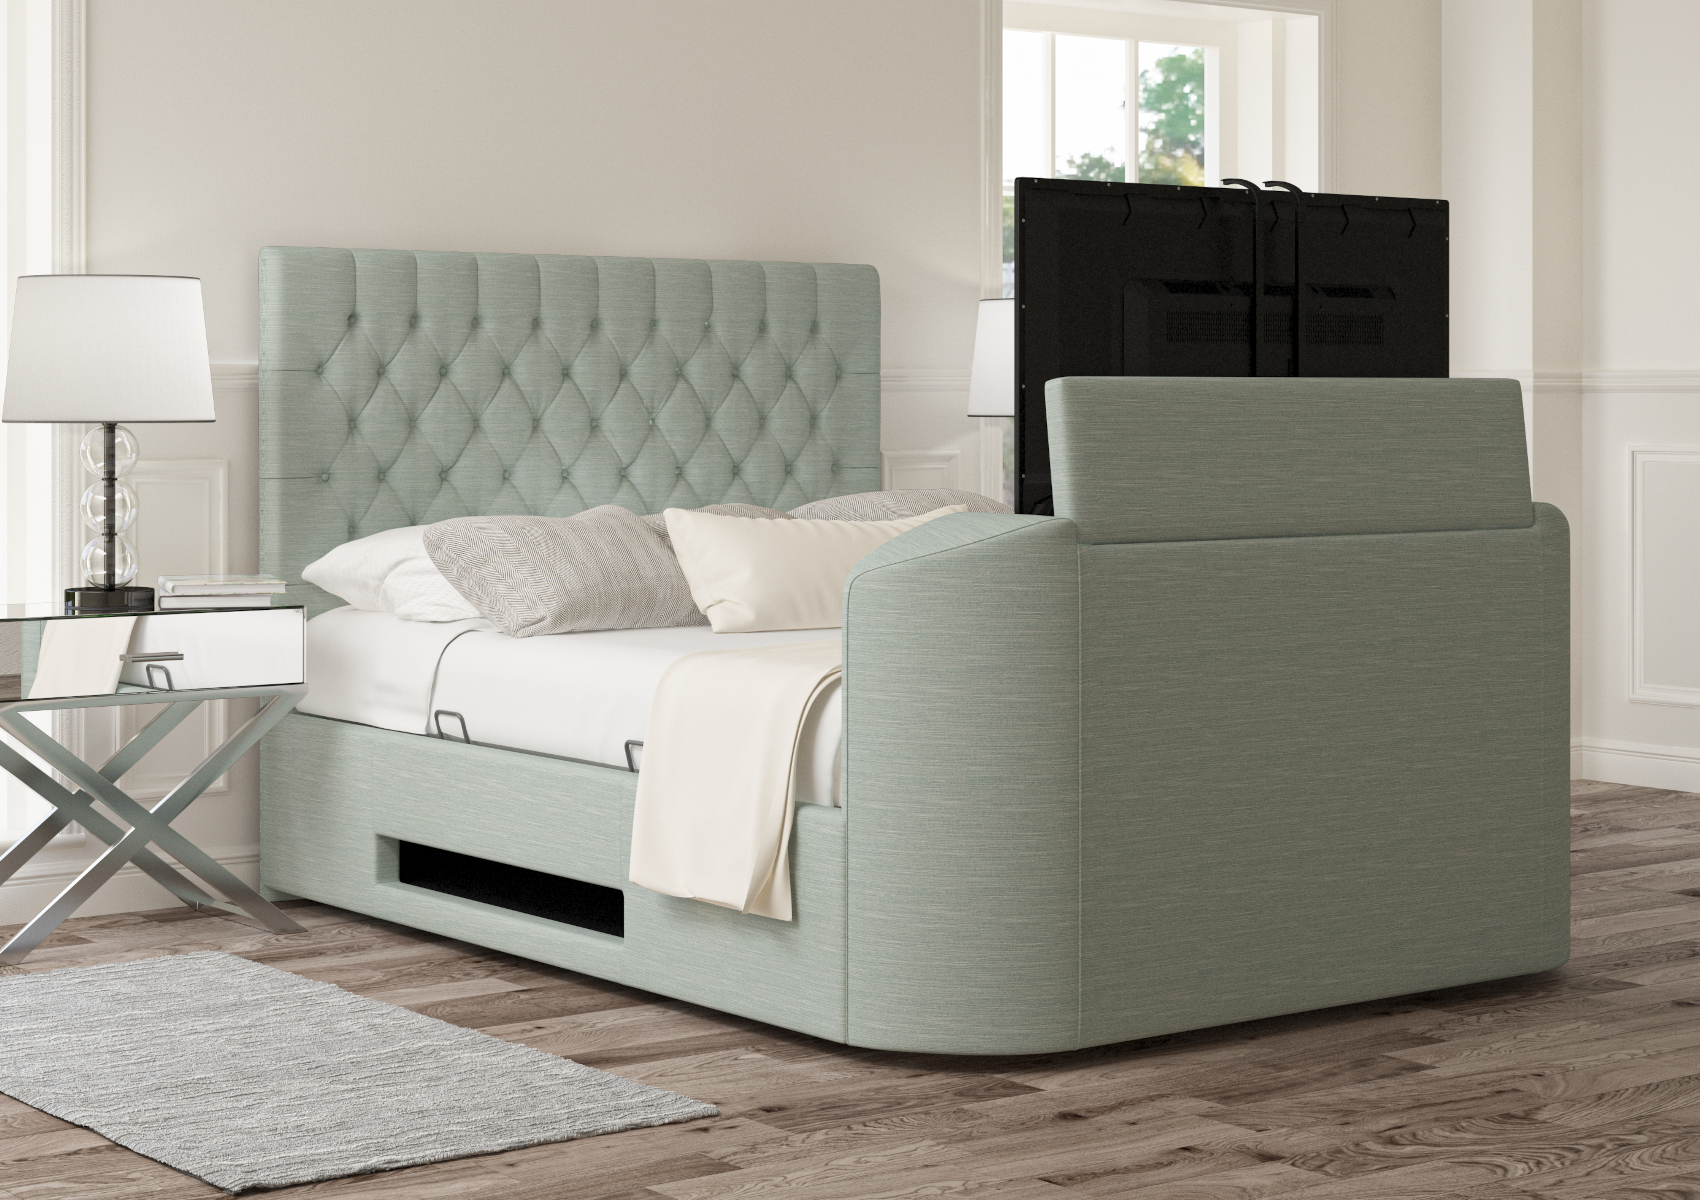 View Claridge Linea SeaBlue Upholstered Double Multifunctional Ottoman Smart TV Bed Time4Sleep information